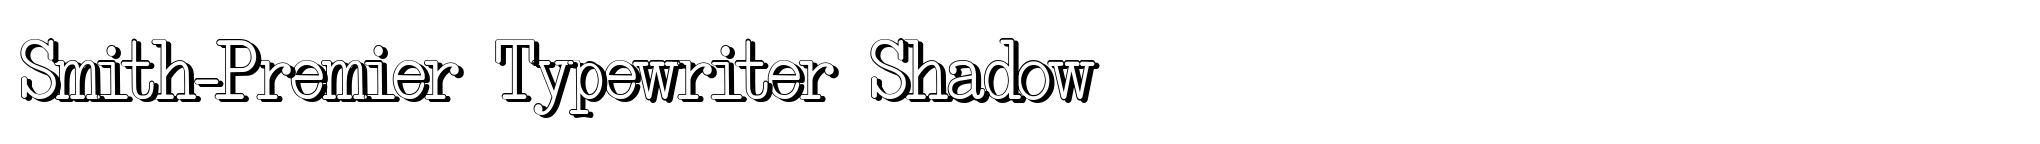 Smith-Premier Typewriter Shadow image